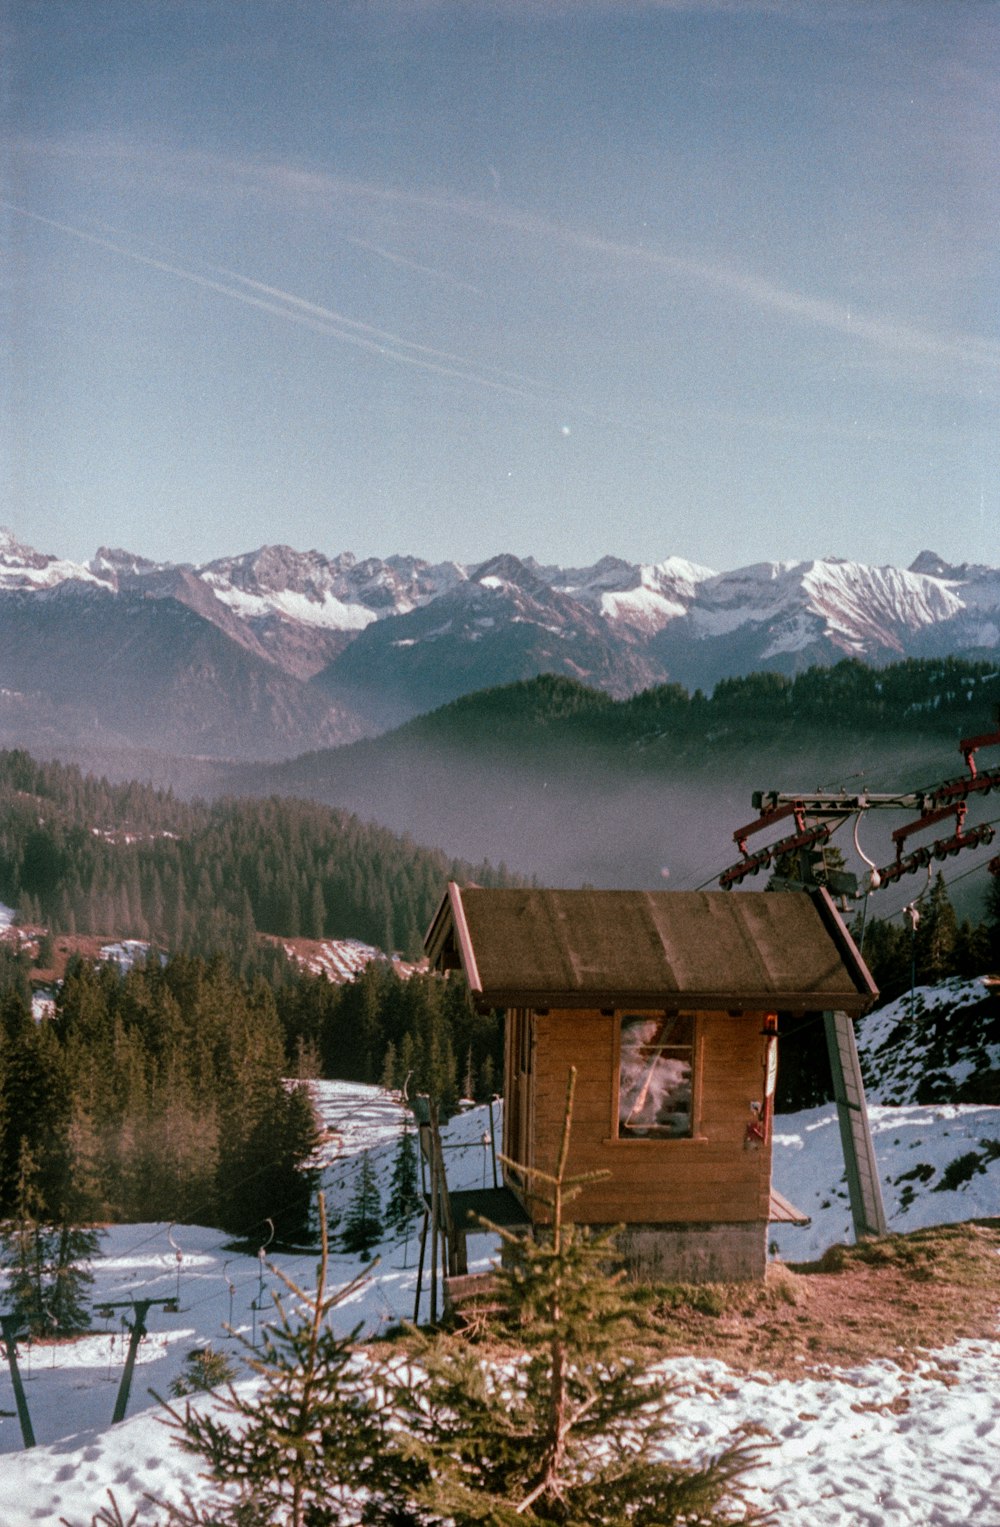 a cabin in a snowy landscape